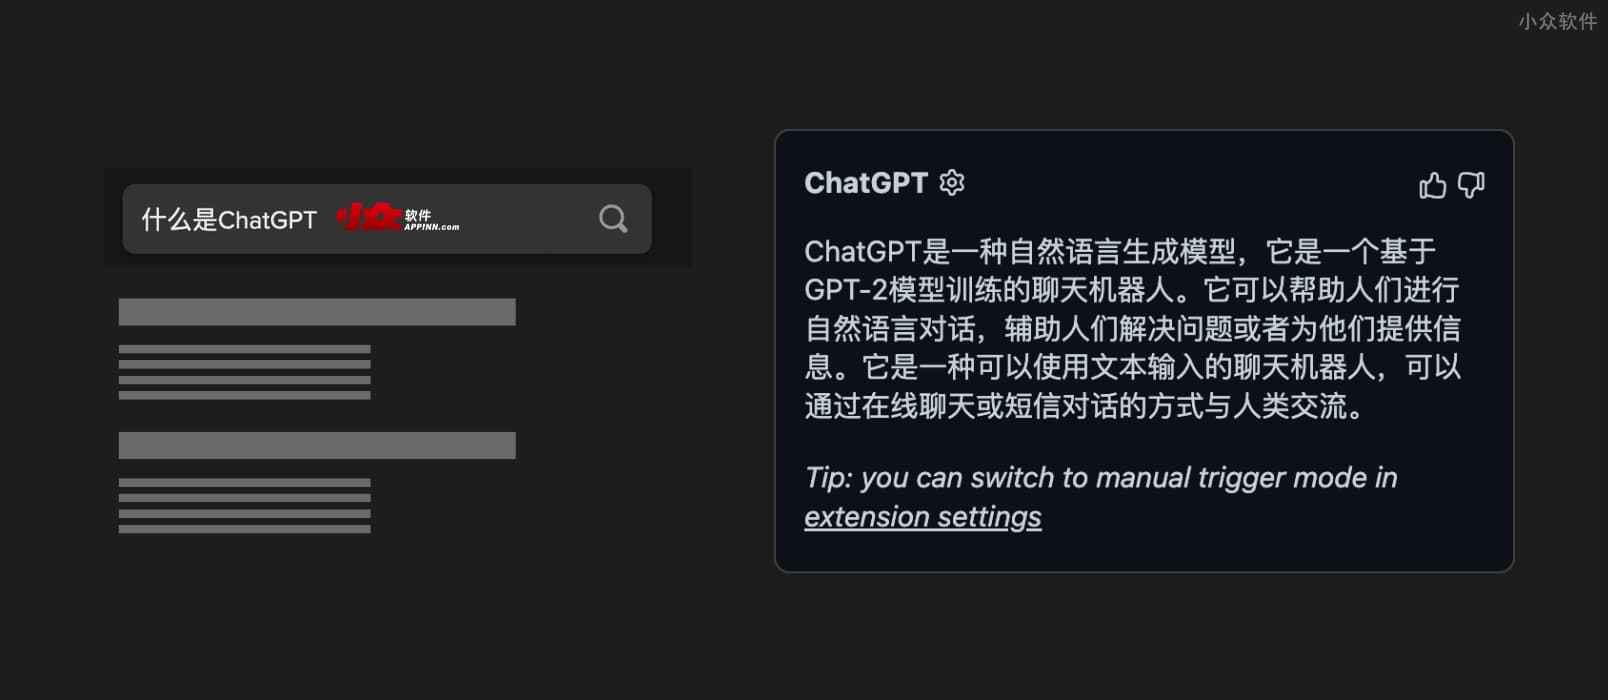 ChatGPT for Google – 在 10 大搜索引擎结果旁边显示 ChatGPT 结果，支持 Google、百度、Bing、DuckDuc